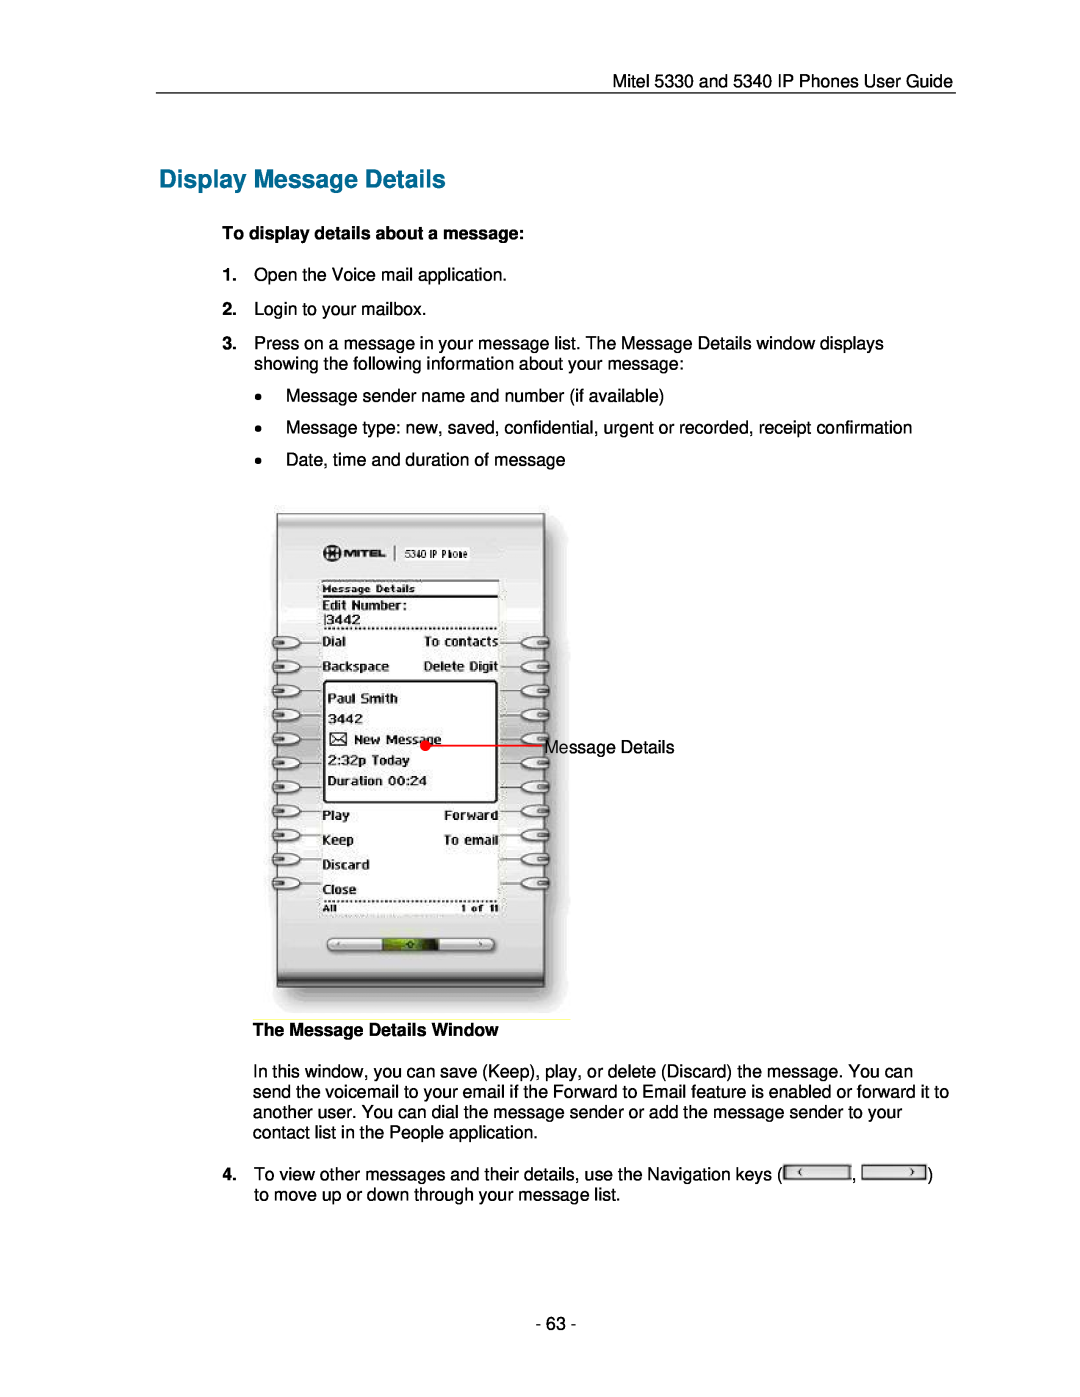 Mitel 5330 manual Display Message Details, To display details about a message, The Message Details Window 